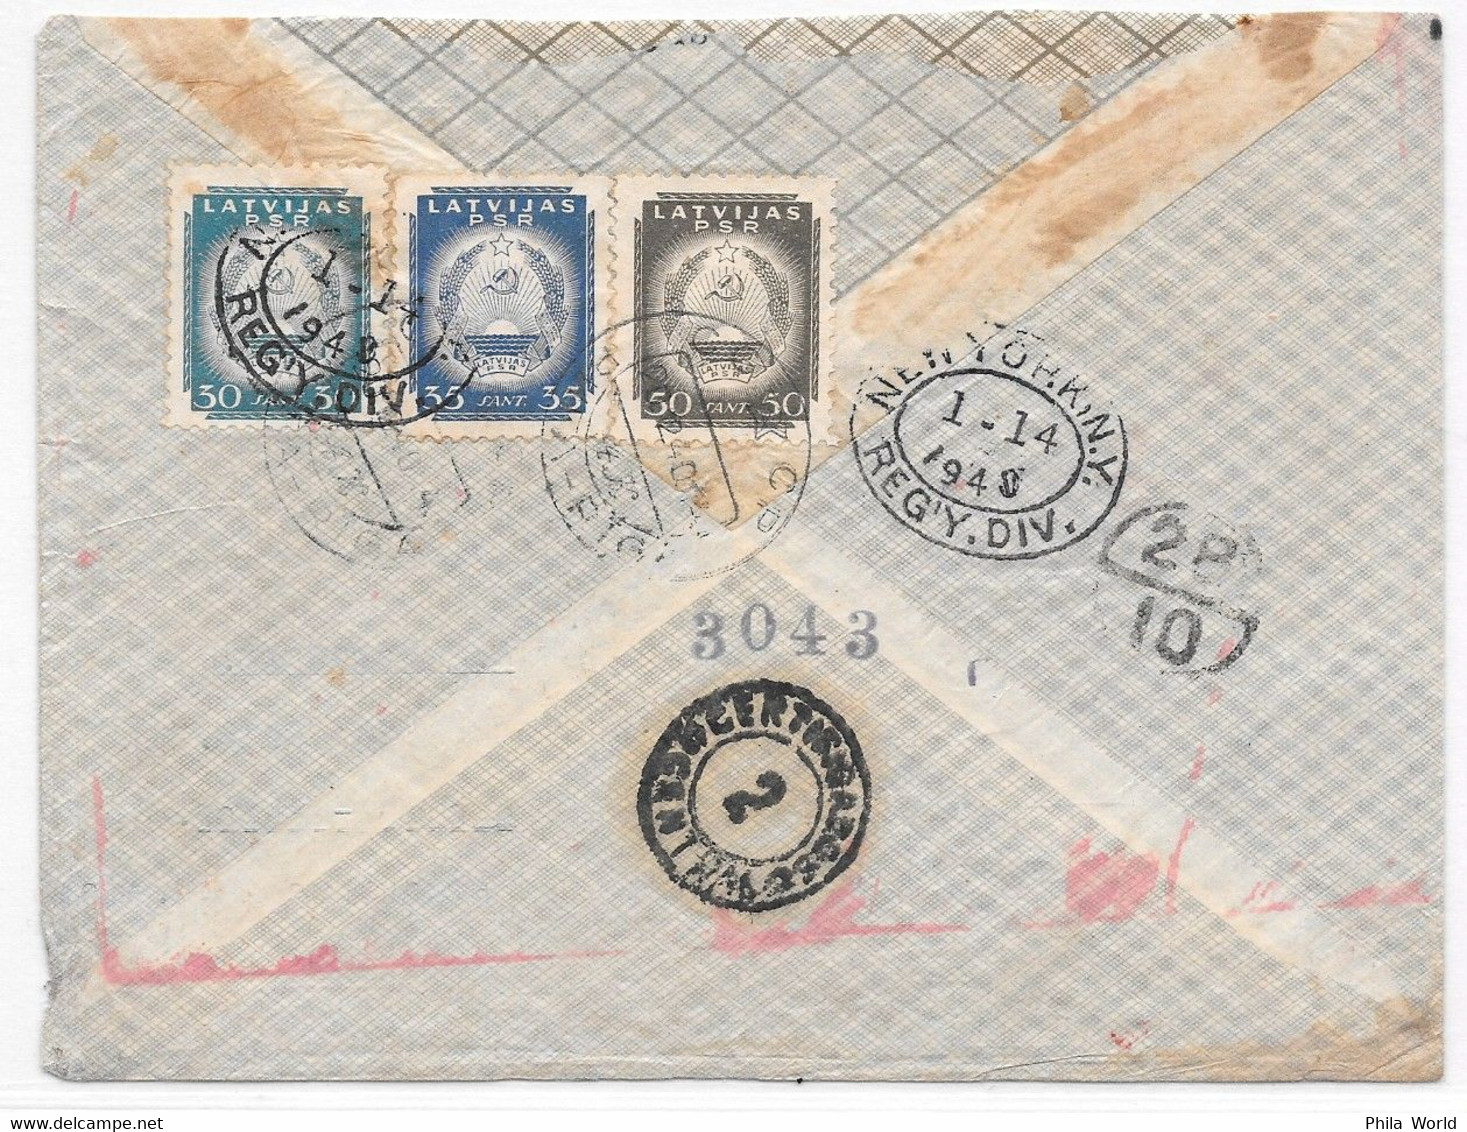 PANAM PAA FAM-18 - LATVIA LETTONIE LATVIJAS CCCP RIGA 1940 Air Mail Registered Cover To ARGENTINA Via NY Par Avion - Aerei